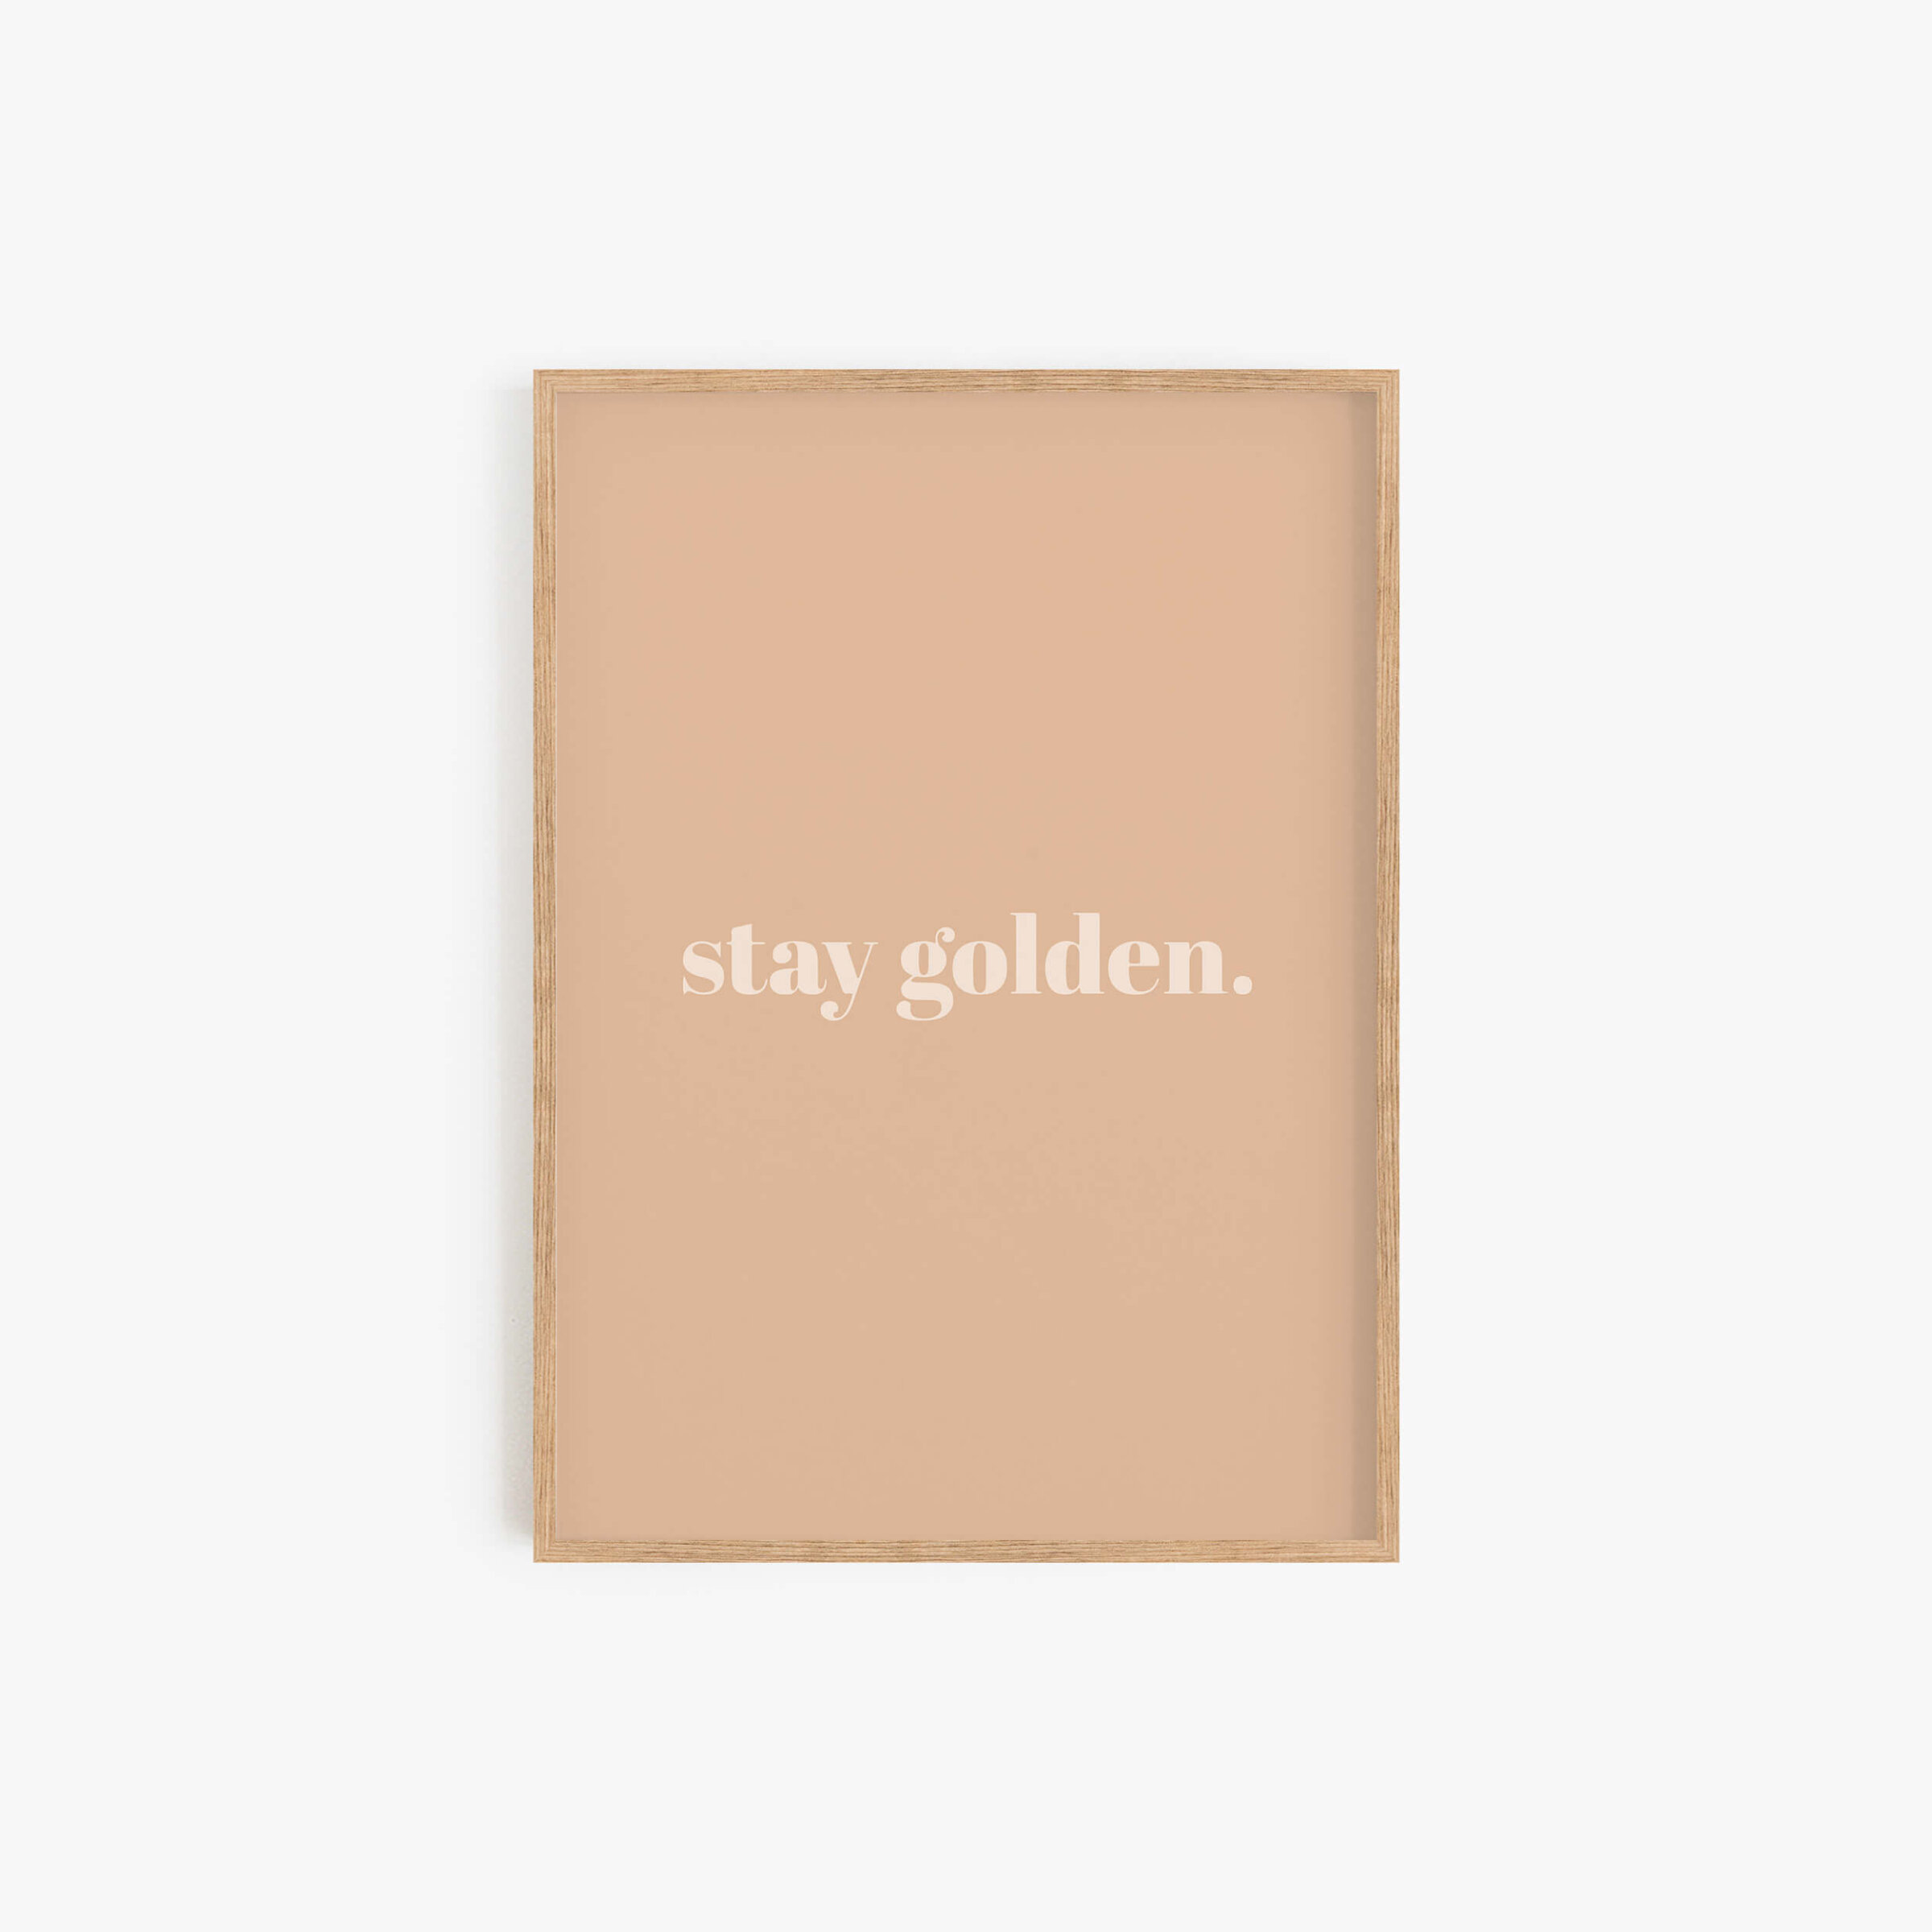 stay-golden-print